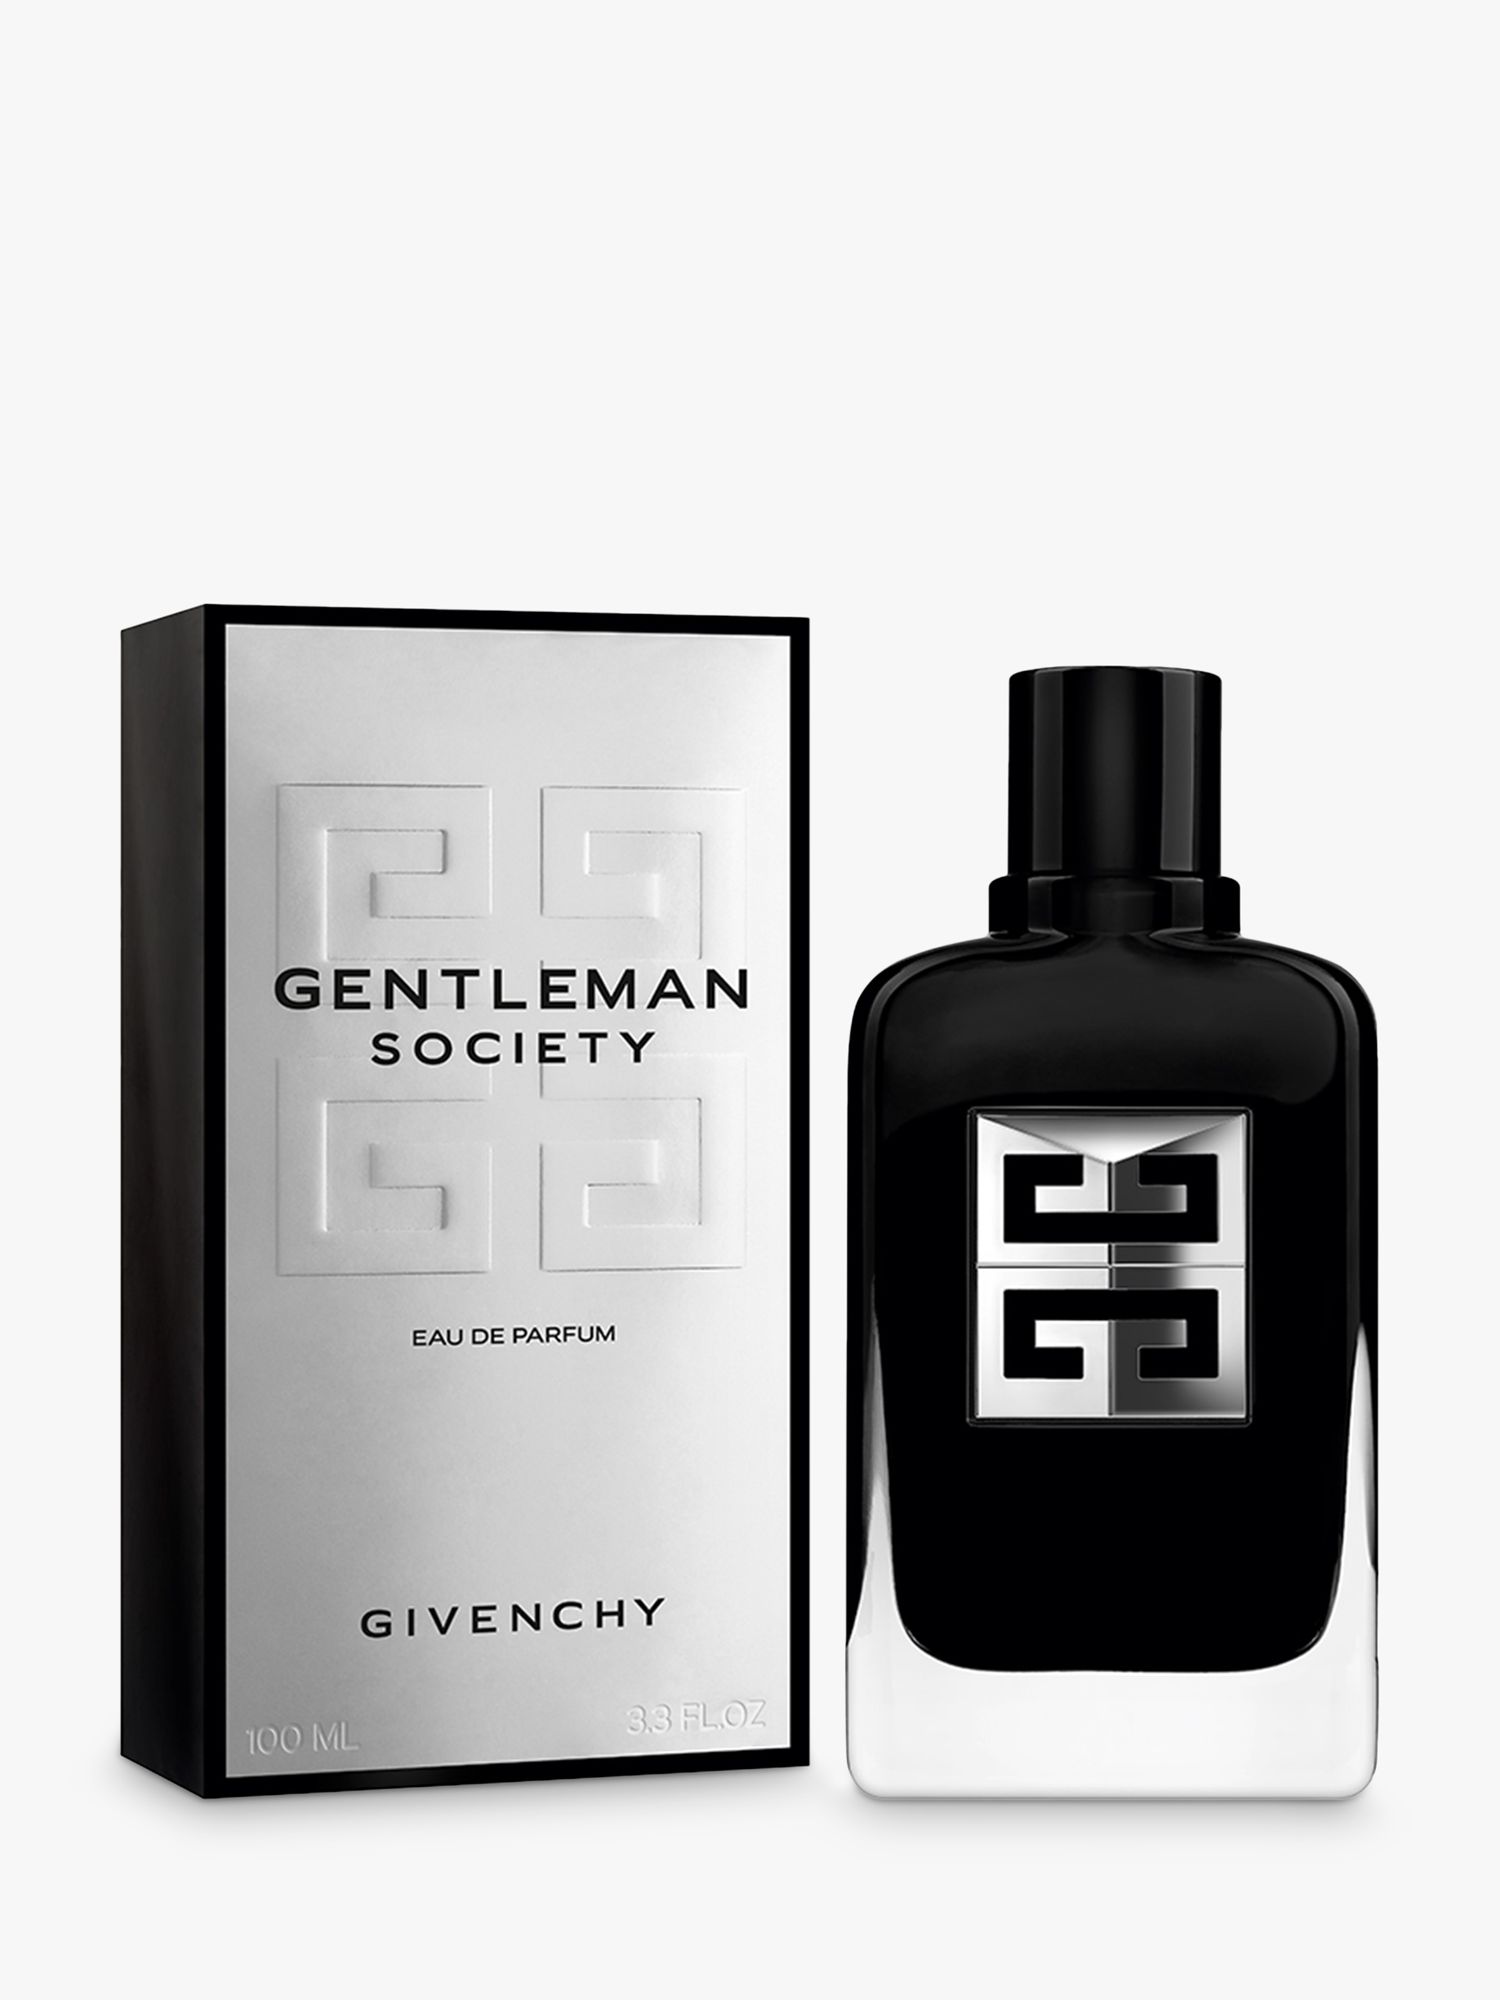 Givenchy Gentleman Society Eau de Parfum, 100ml